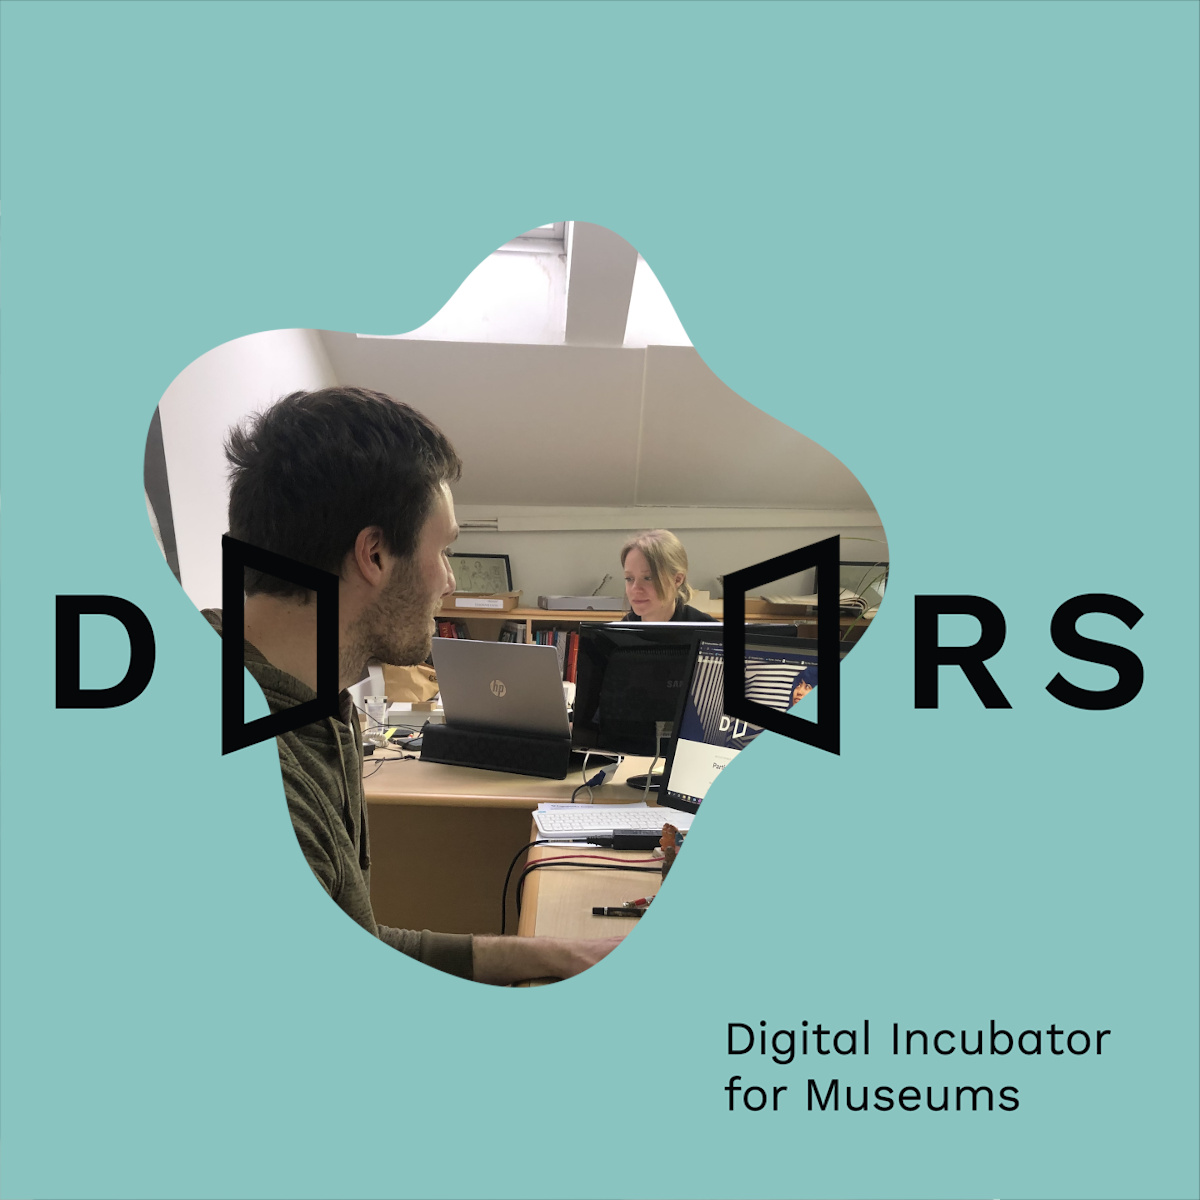 Pilot projekt [Muse4all] AMZ-a ušao u uži izbor DOORS-a - digitalnog inkubatora za muzeje (DOORS - Digital Incubator for Museums).
bit.ly/Muse4allDOORS
@ArsElectronica @Ecsite @museumbooster
#doorseu #museumdoors #museumdigitalization #musetech
#MuseumFromHome